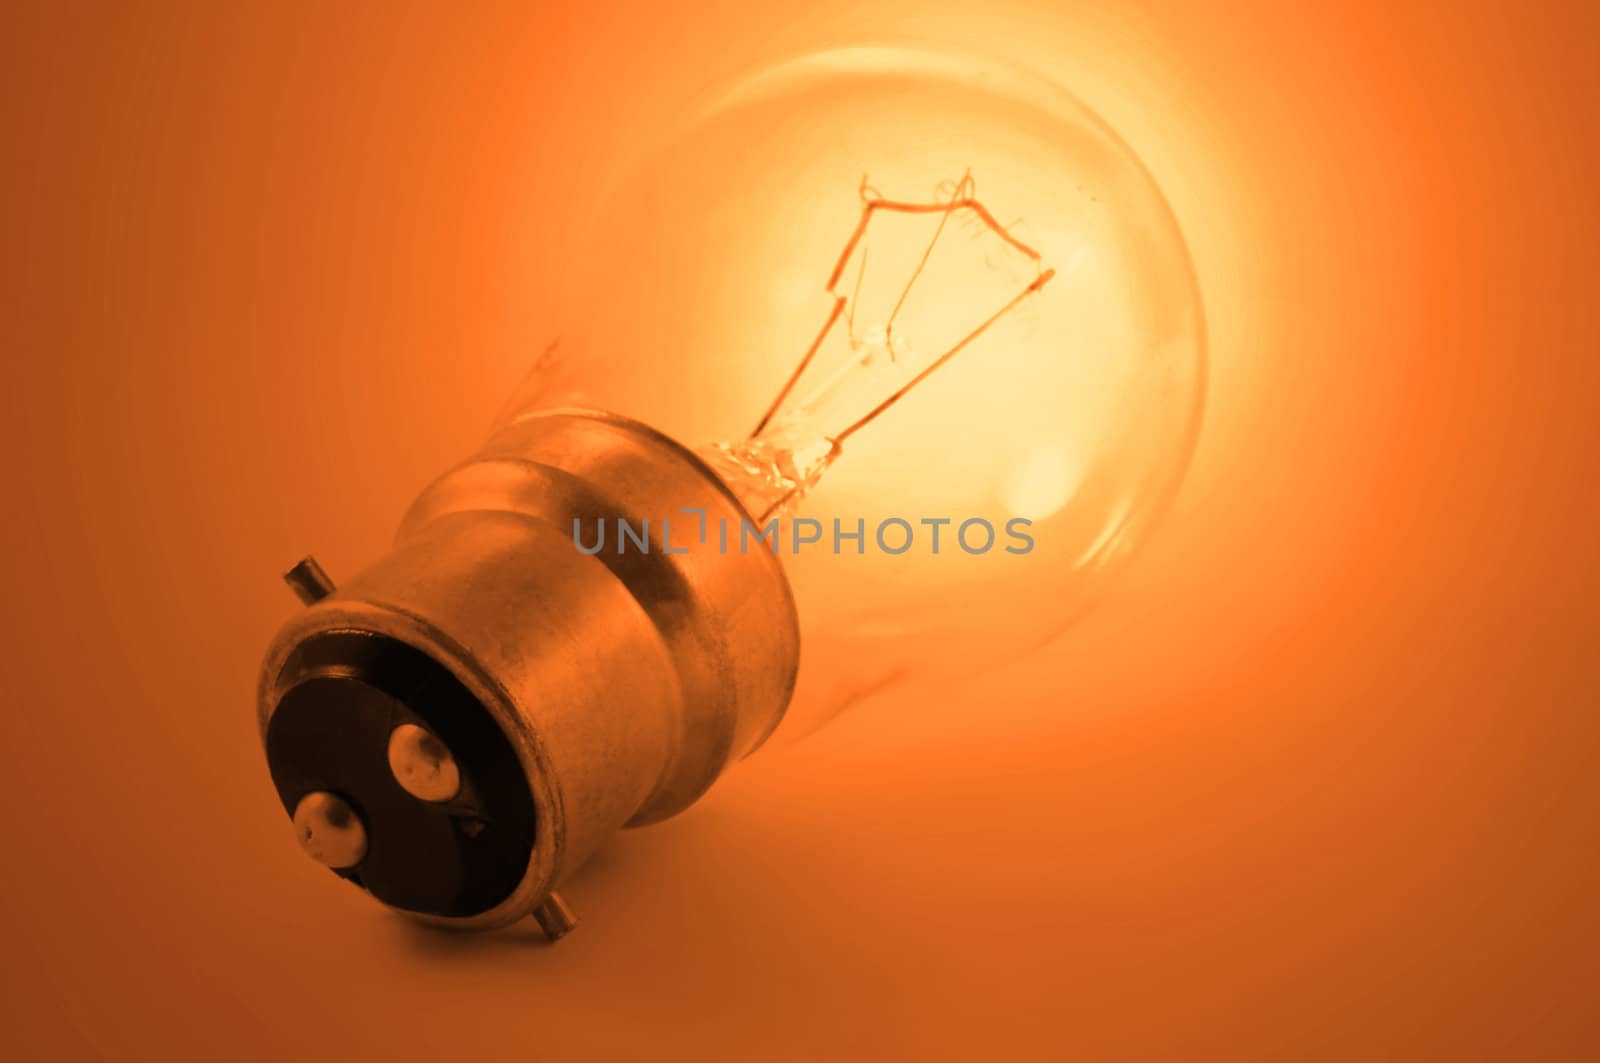 Close up of a single illuminated vibrant orange light bulb